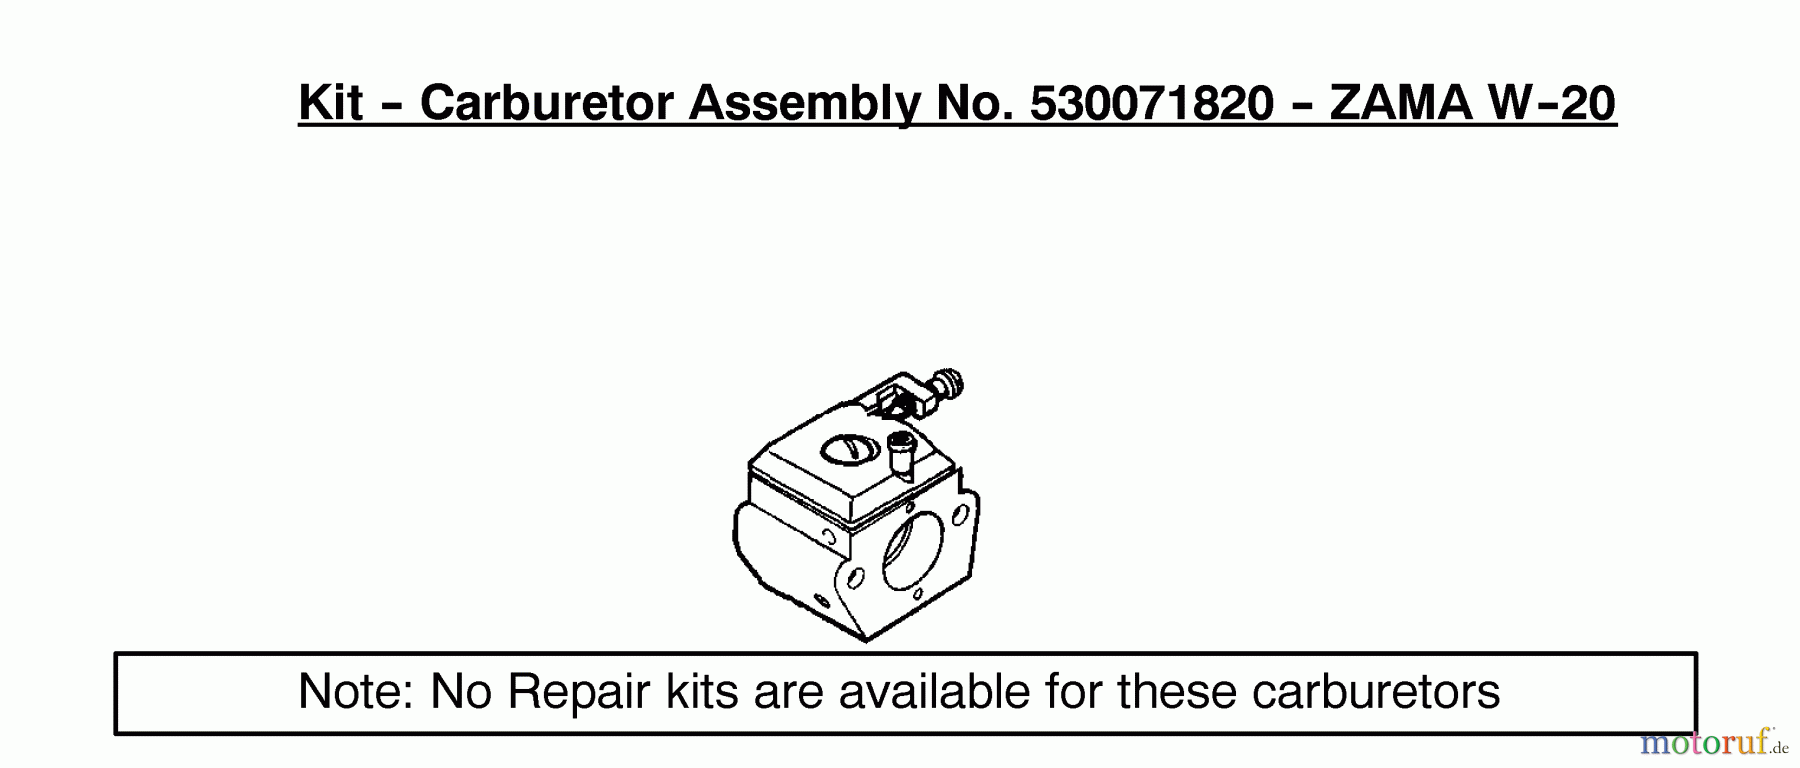  Poulan / Weed Eater Motorsägen 2550LE (Type 1) - Poulan Woodmaster Chainsaw Carburetor Assembly Kit (ZAMA W-20) 530071820